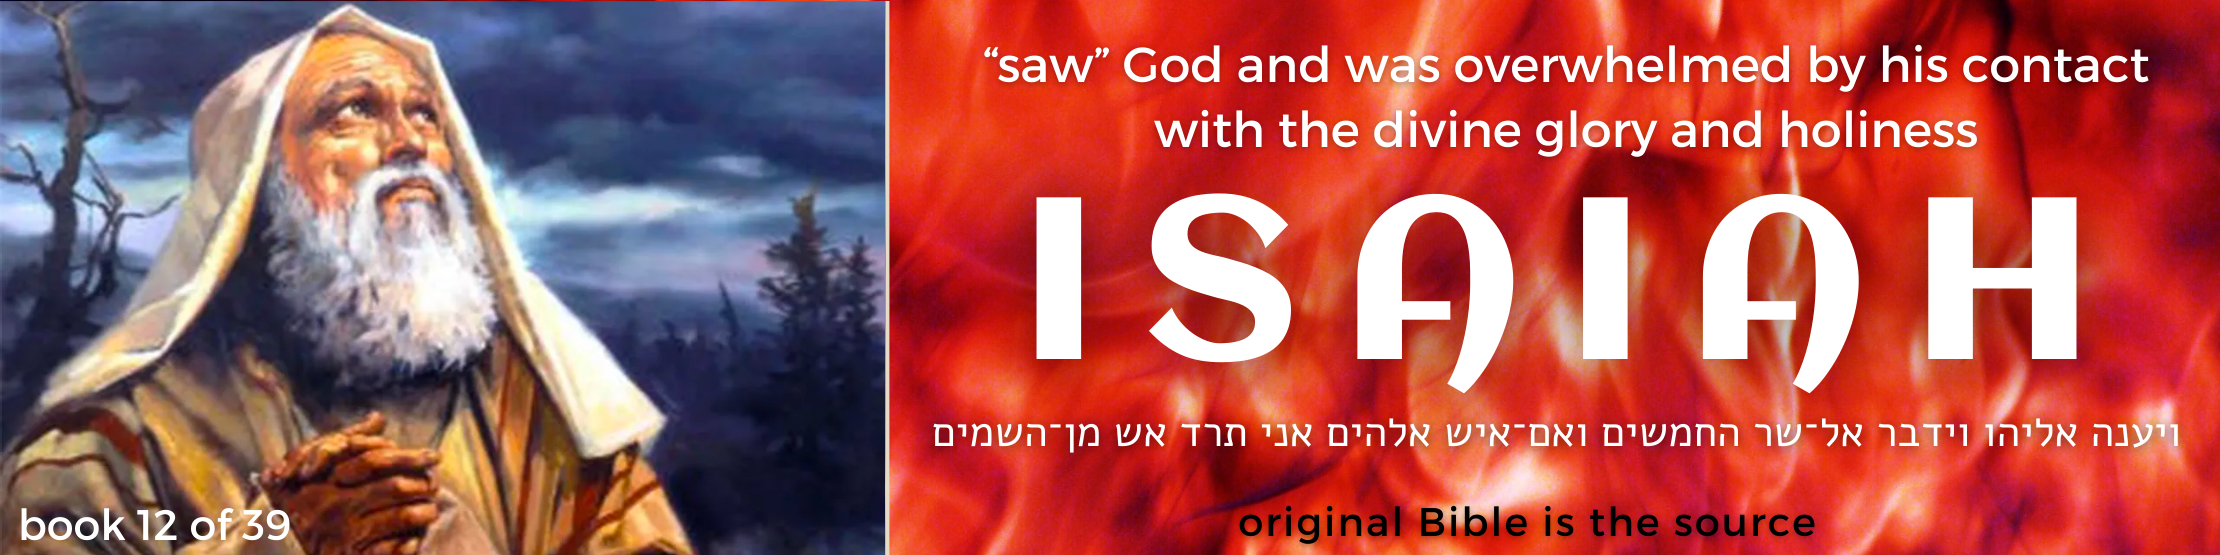 12 Isaiah book - original bible - banner